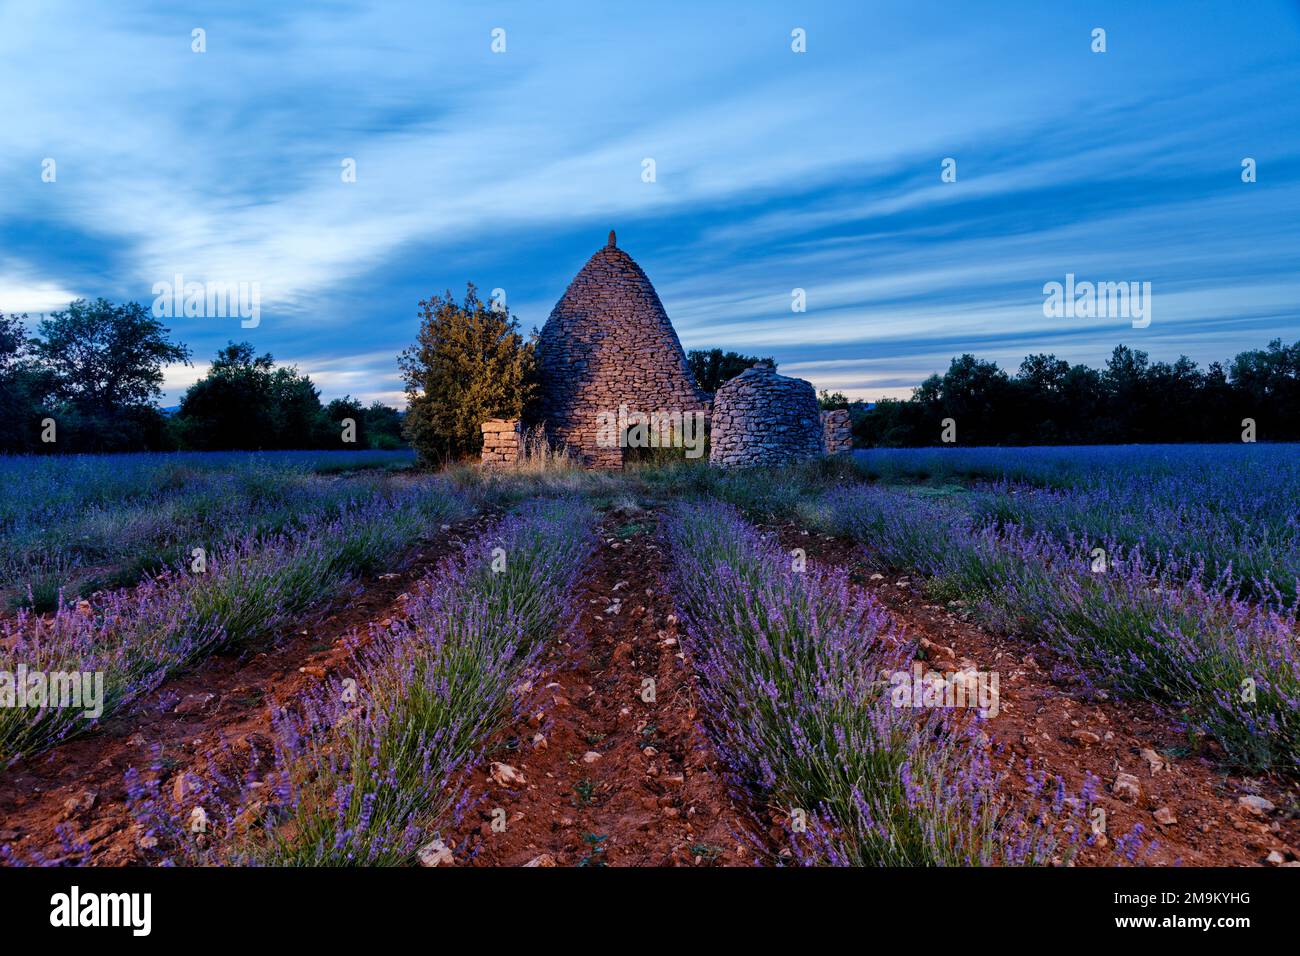 Borie in the center of a lavender field, Saignon, Provence, France Stock Photo